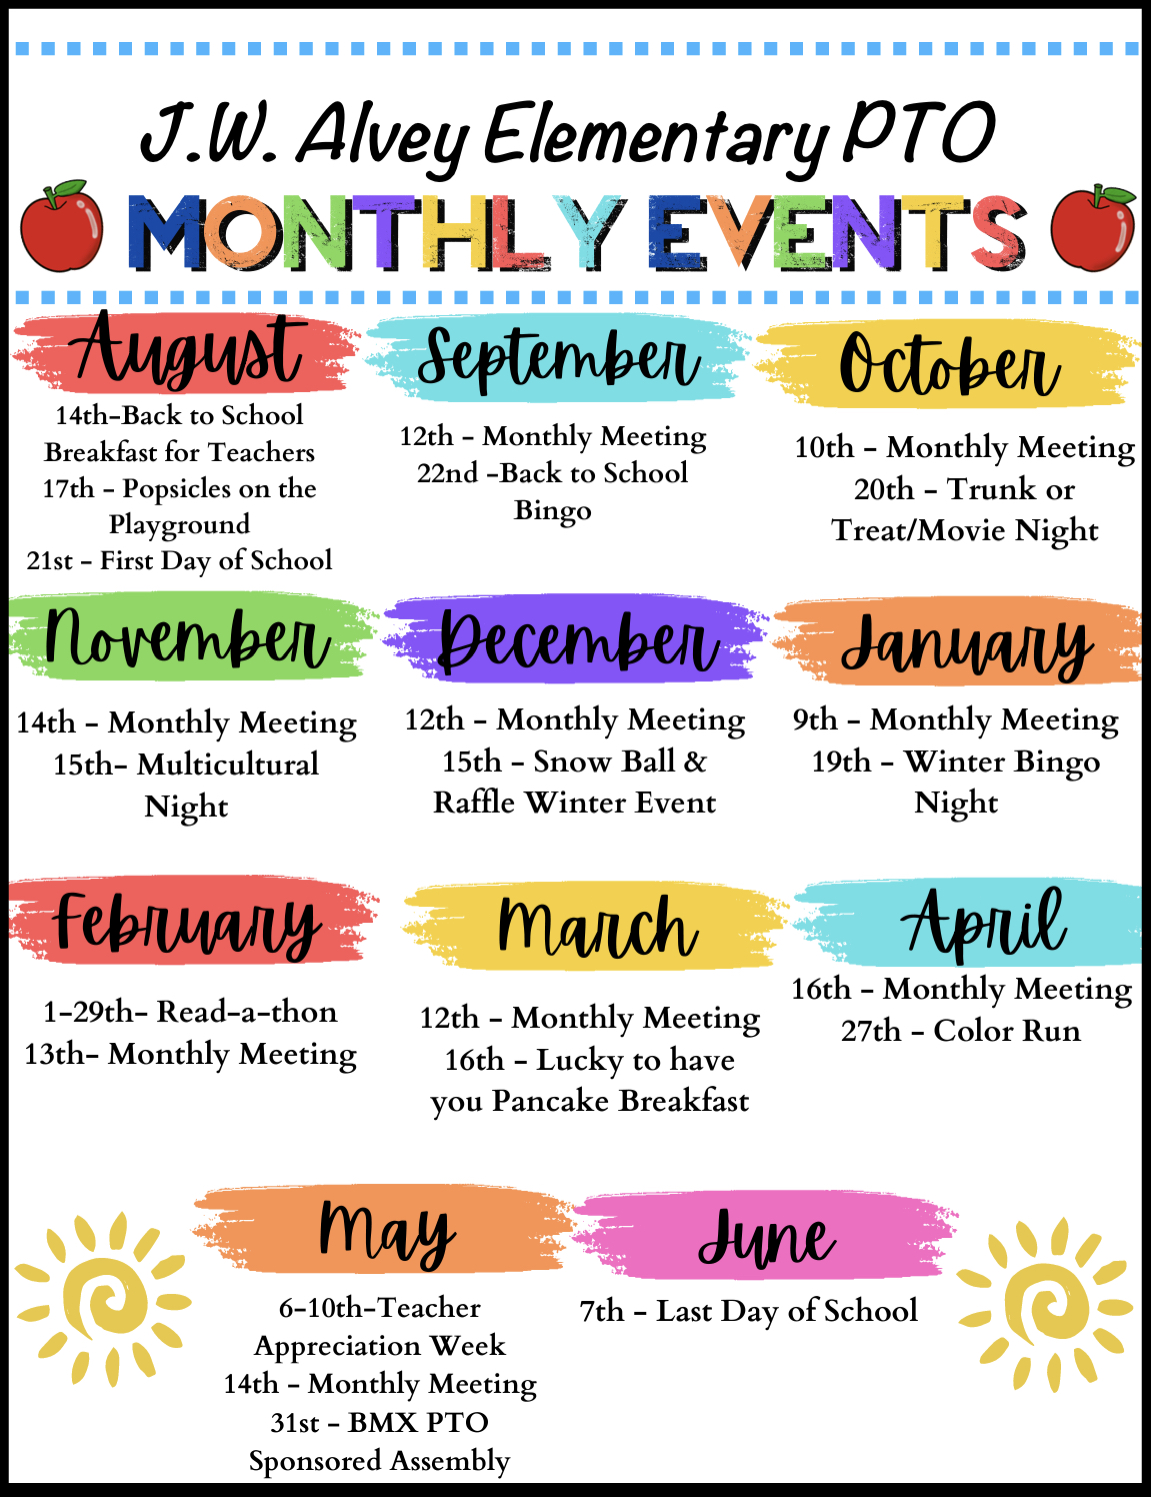 Monthly events calendar for Alvey Elementary School PTO